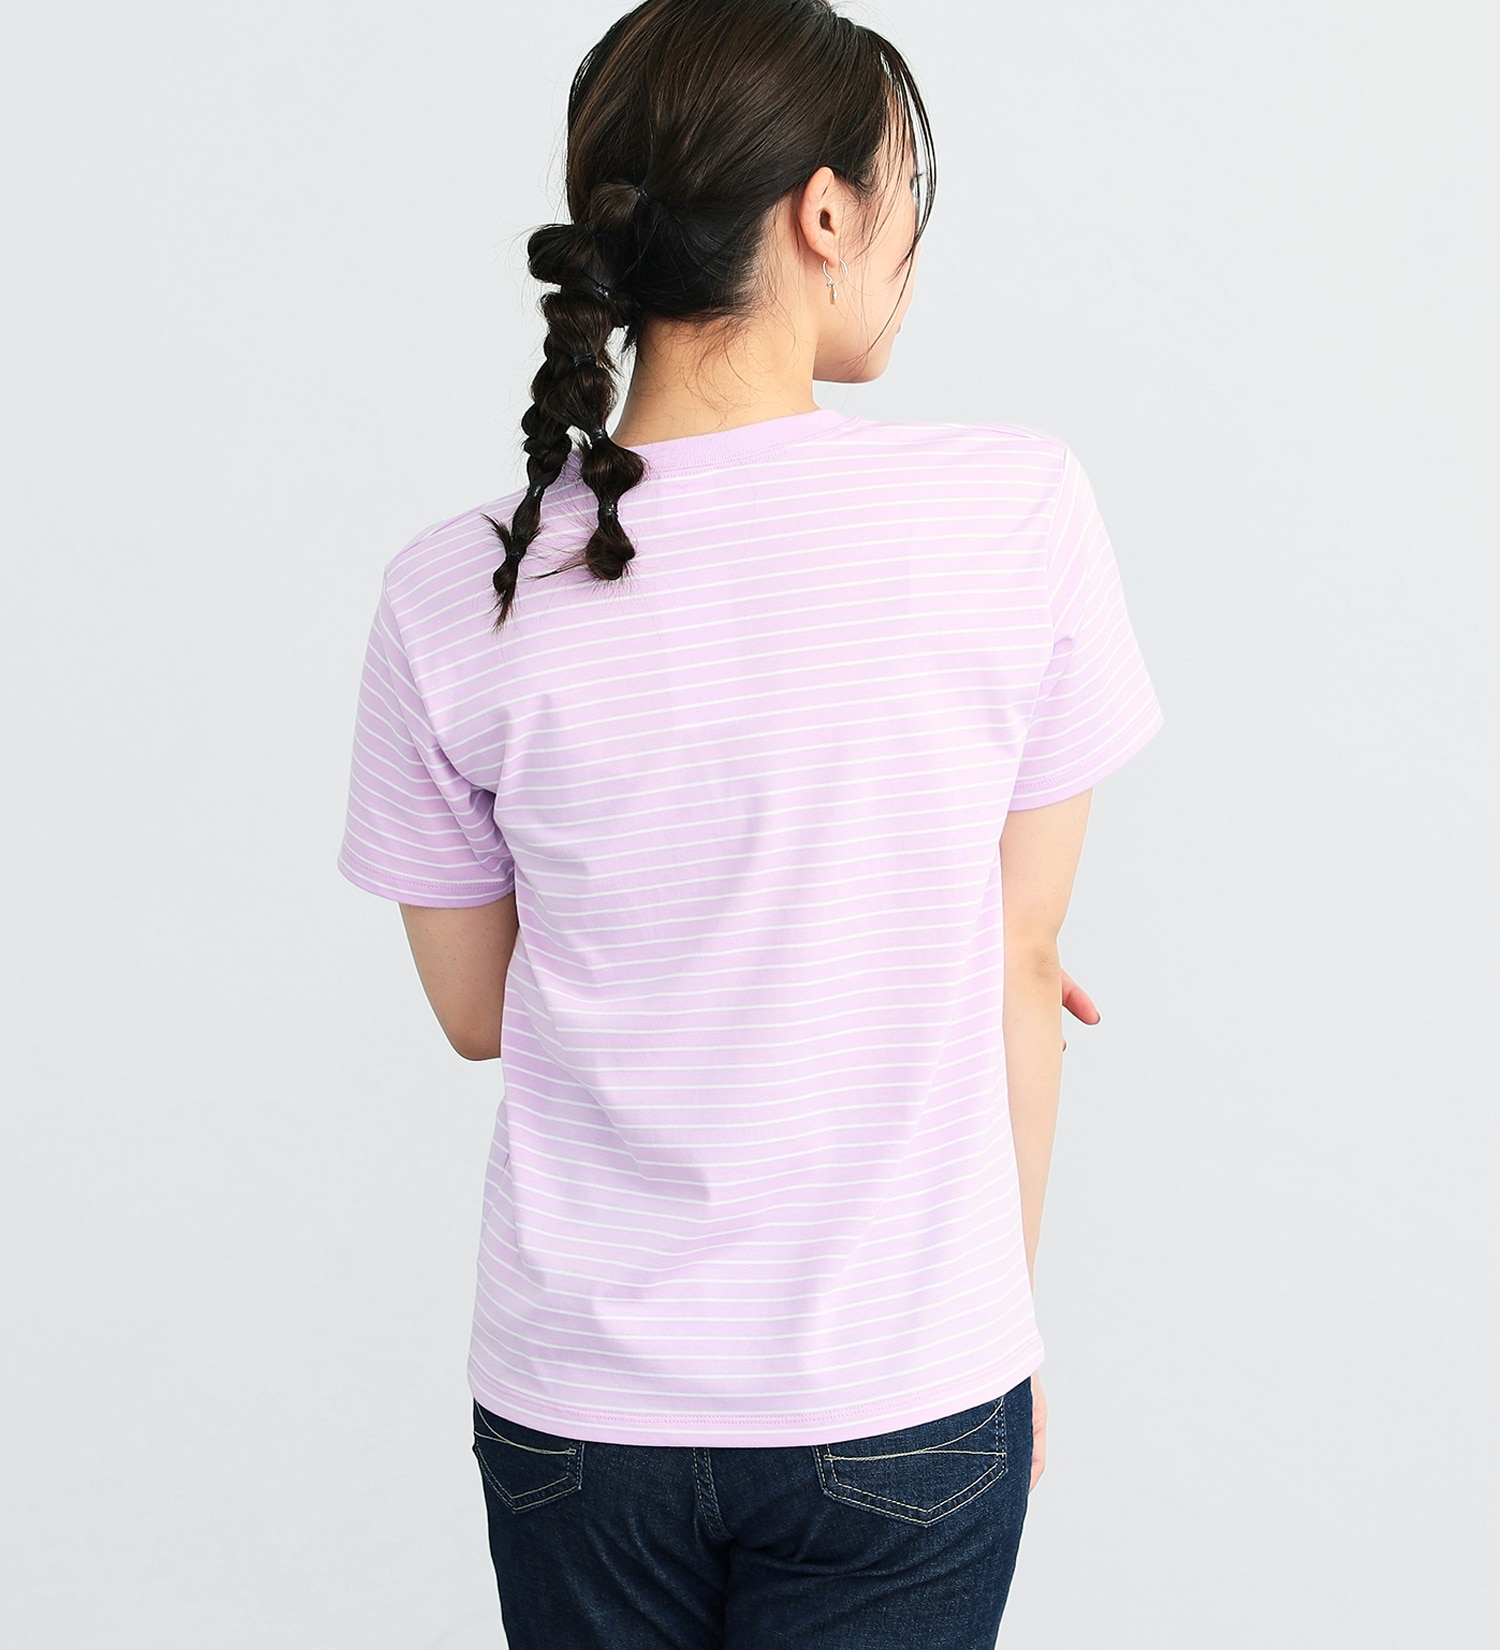 SOMETHING(サムシング)の【試着対象】SOMETHING シャイニープリント半袖Tシャツ|トップス/Tシャツ/カットソー/レディース|ピンク